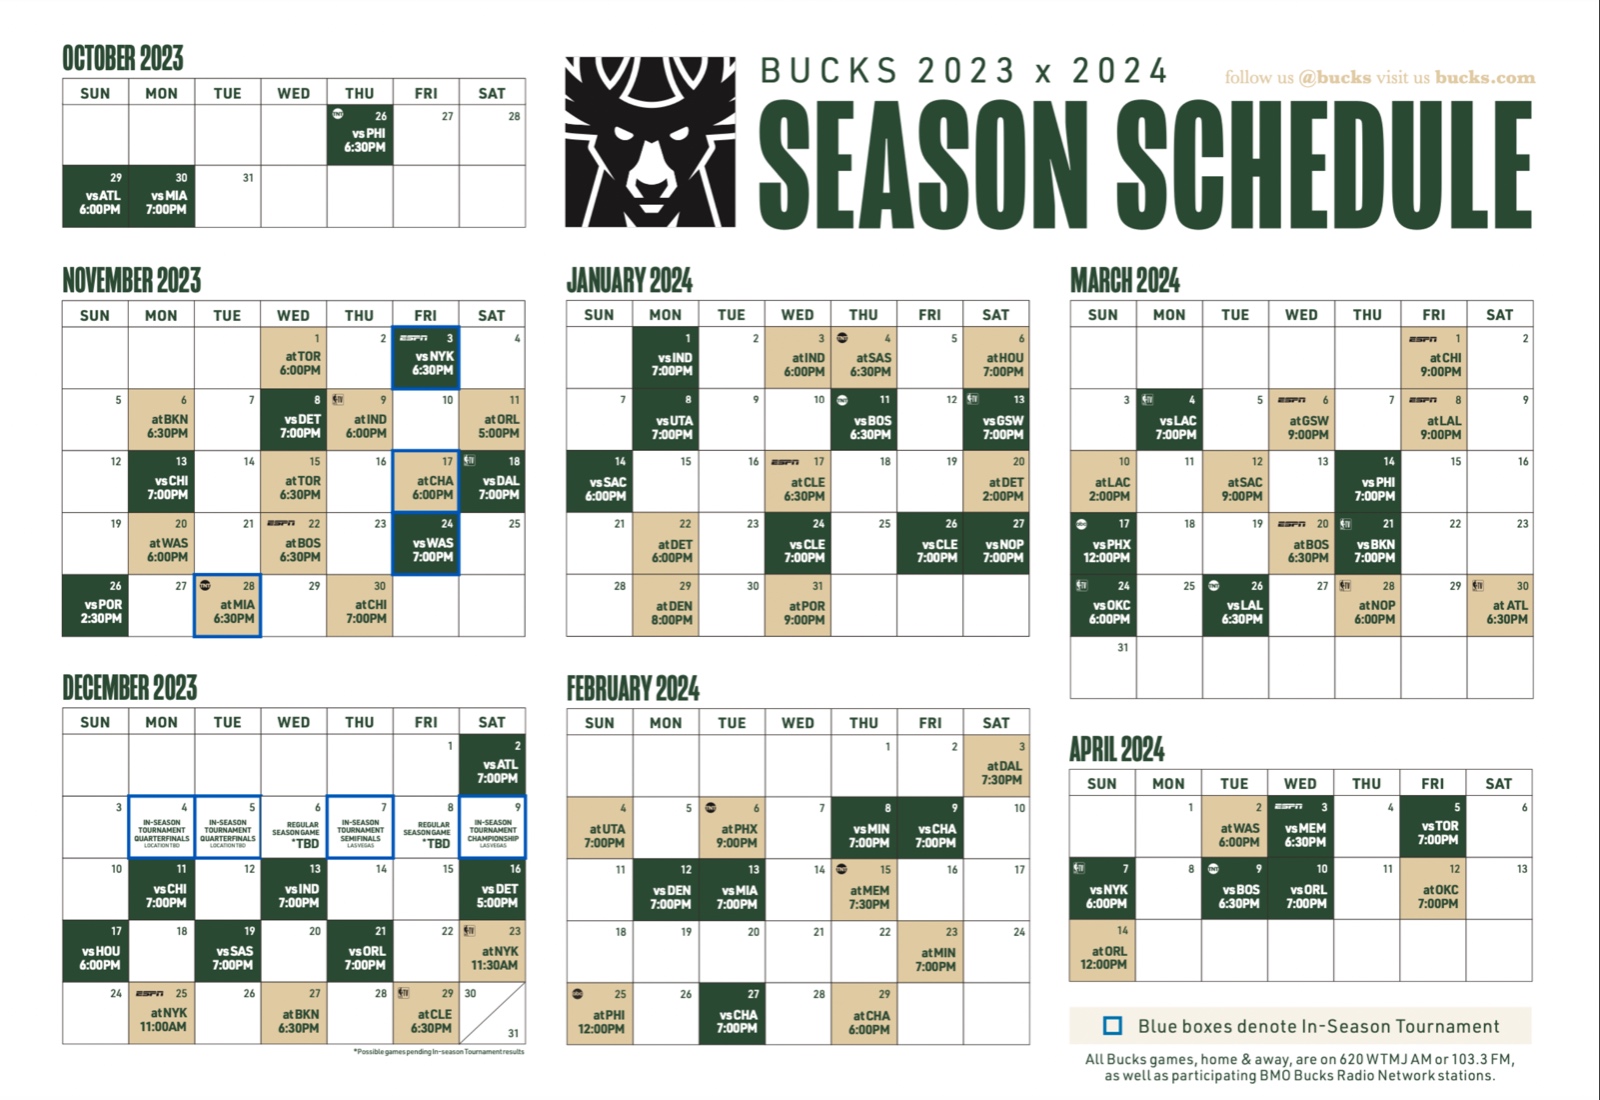 Here's the Bucks' 202324 regular season schedule